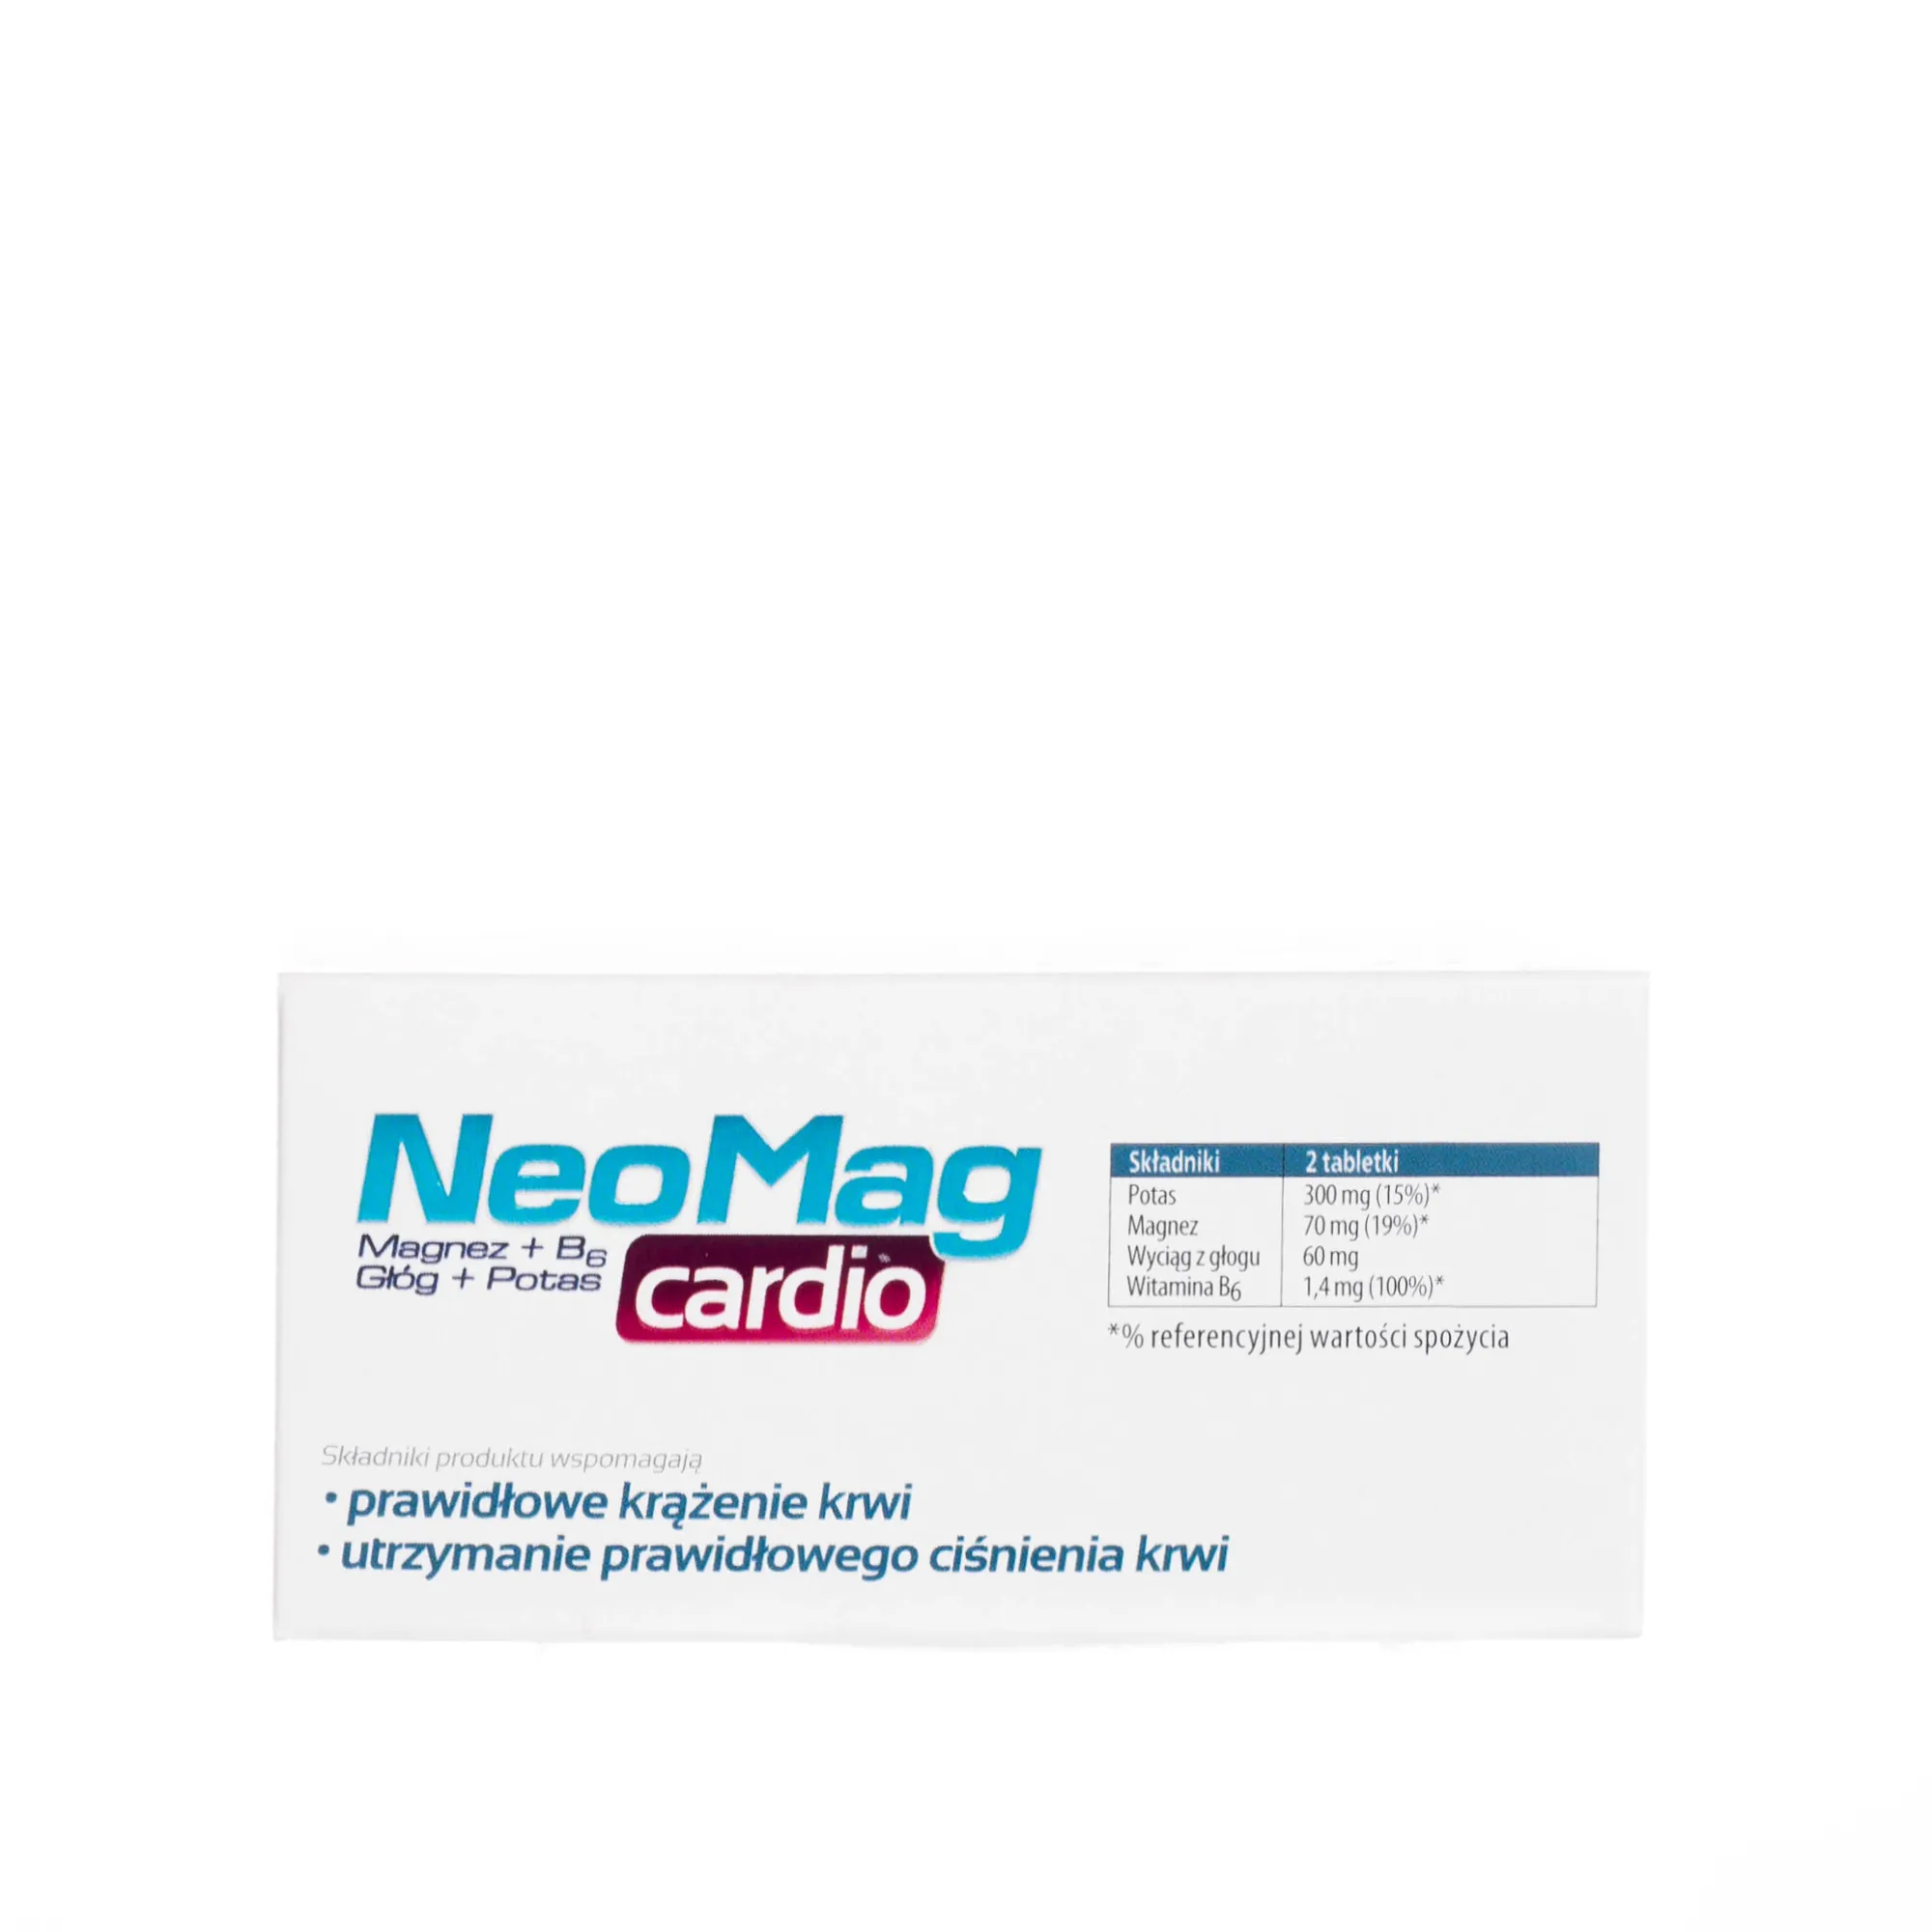 NeoMag Cardio, suplement diety, Magnez + B6 + Głóg + Potas, 50 tabletek 